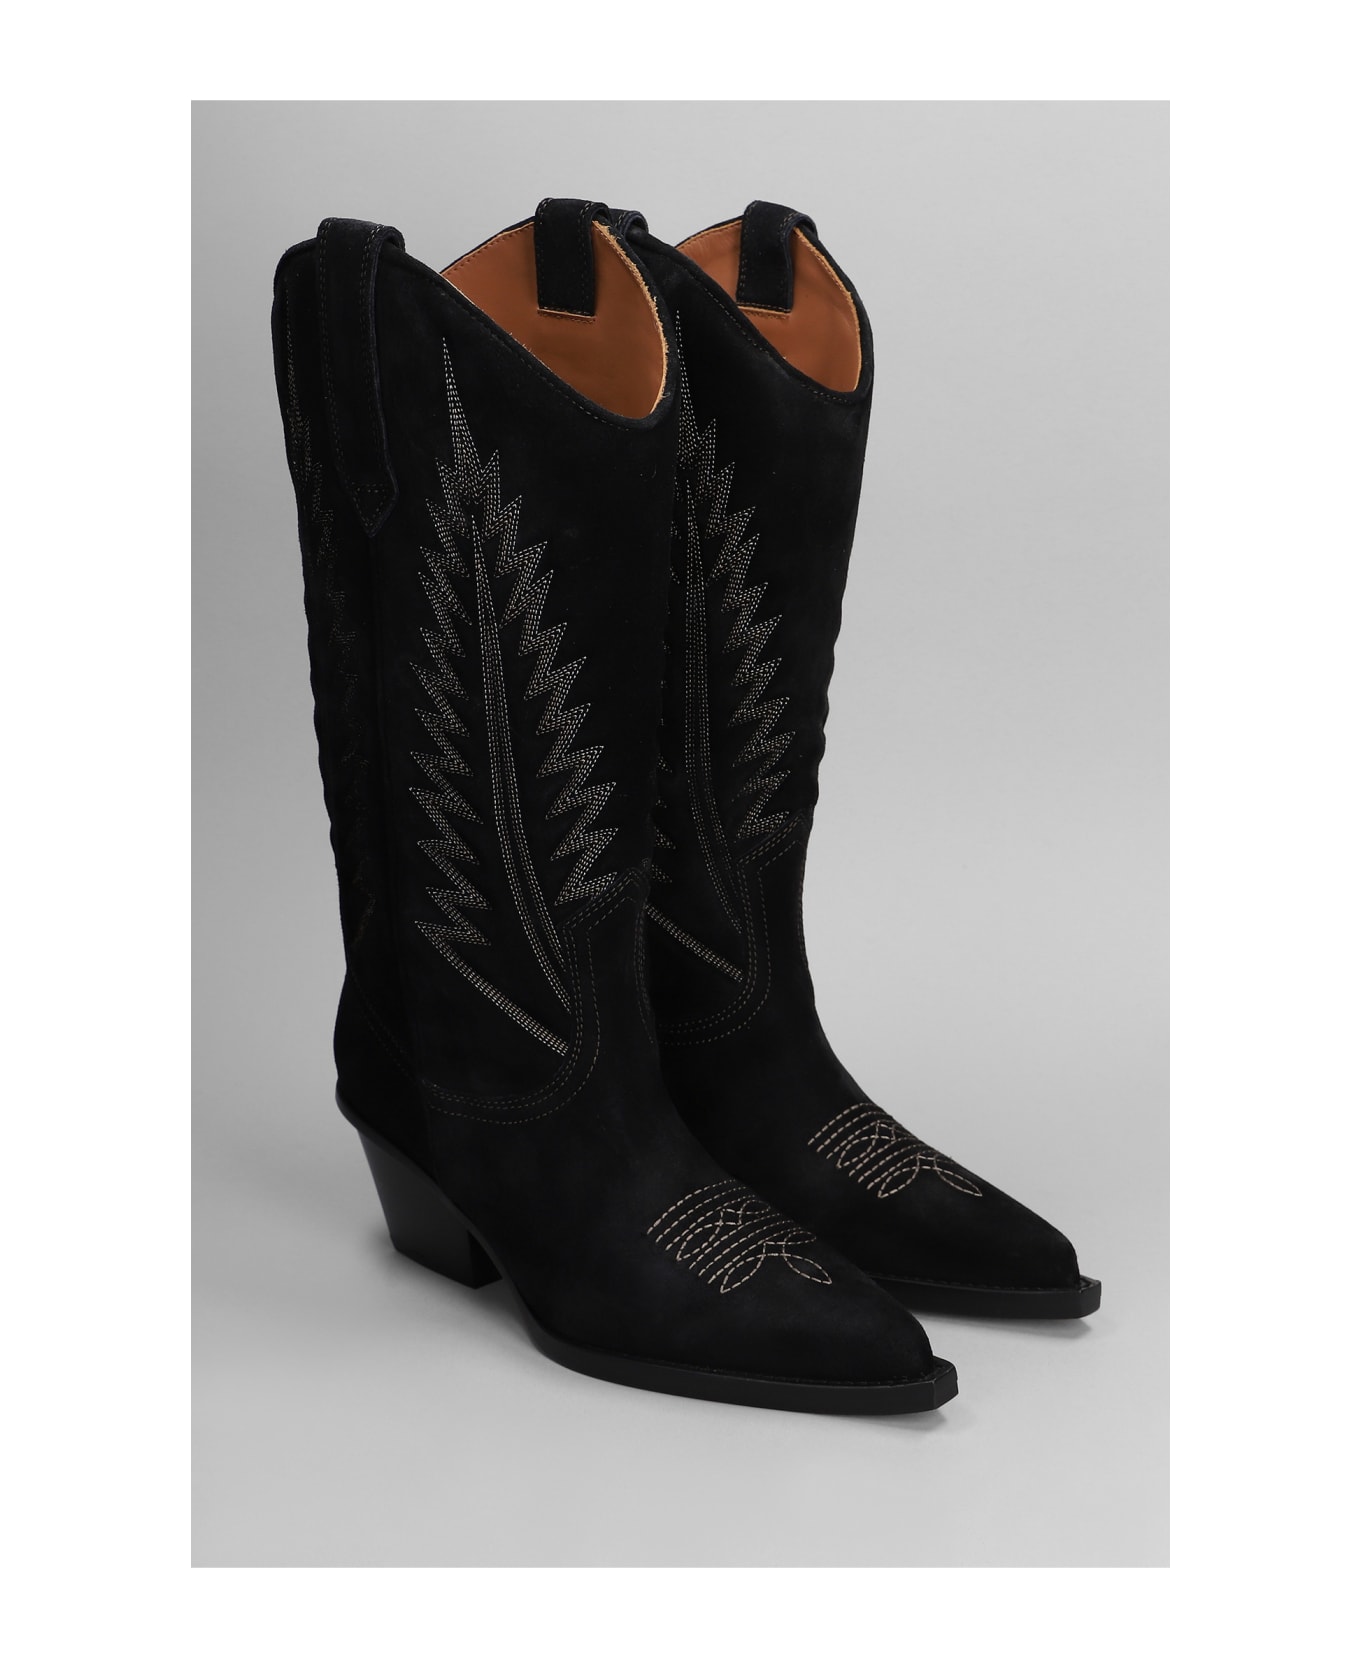 Paris Texas Rosario Texan Boots In Black Suede - Beige